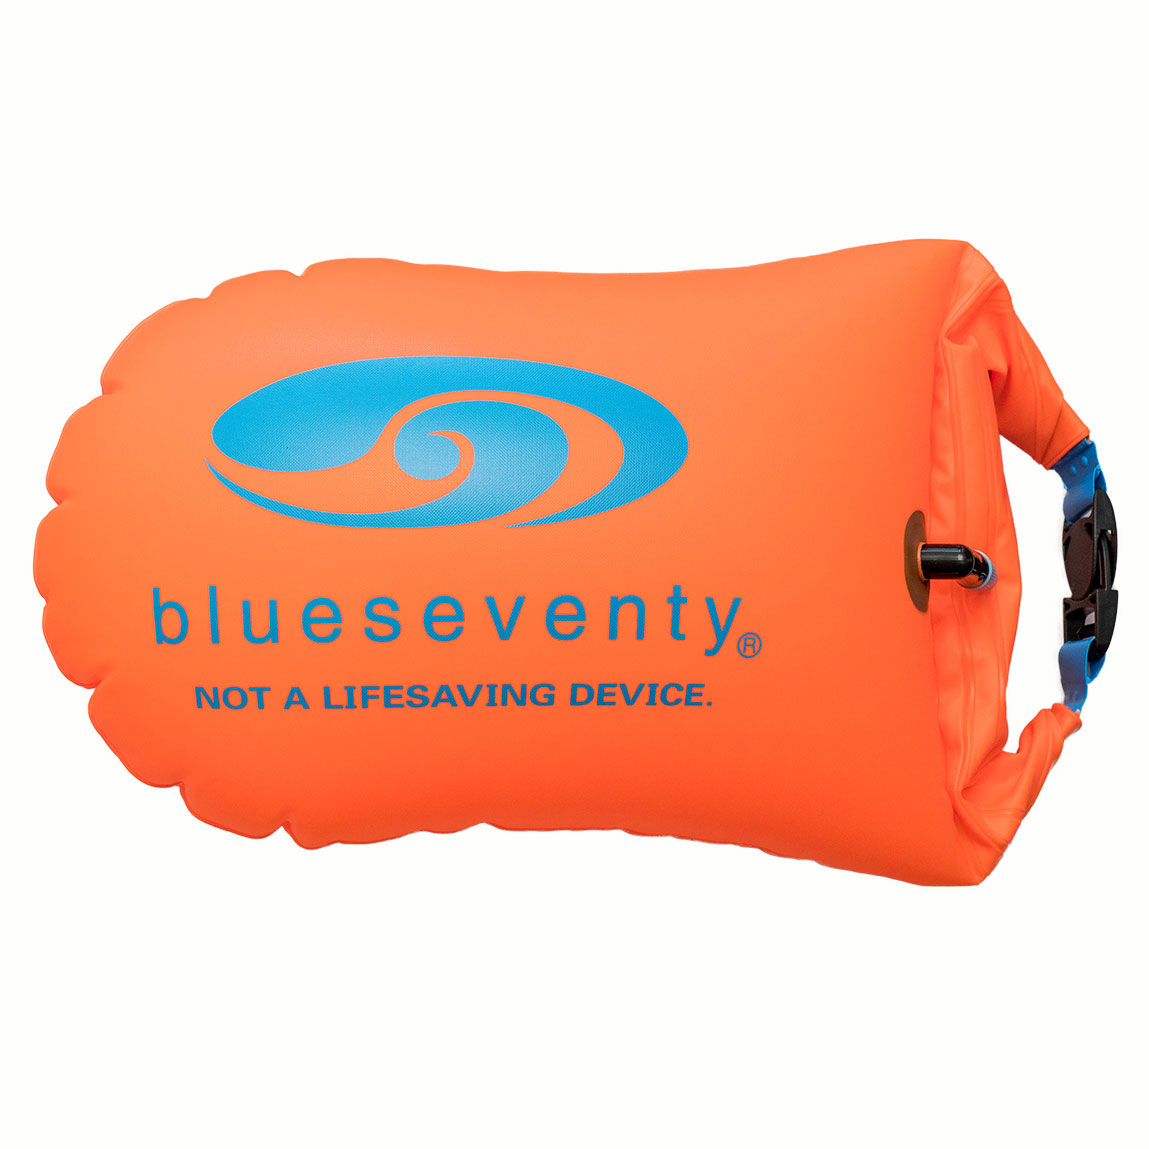 Productfoto van blueseventy Buddy Bag Plus Zwemboei - oranje